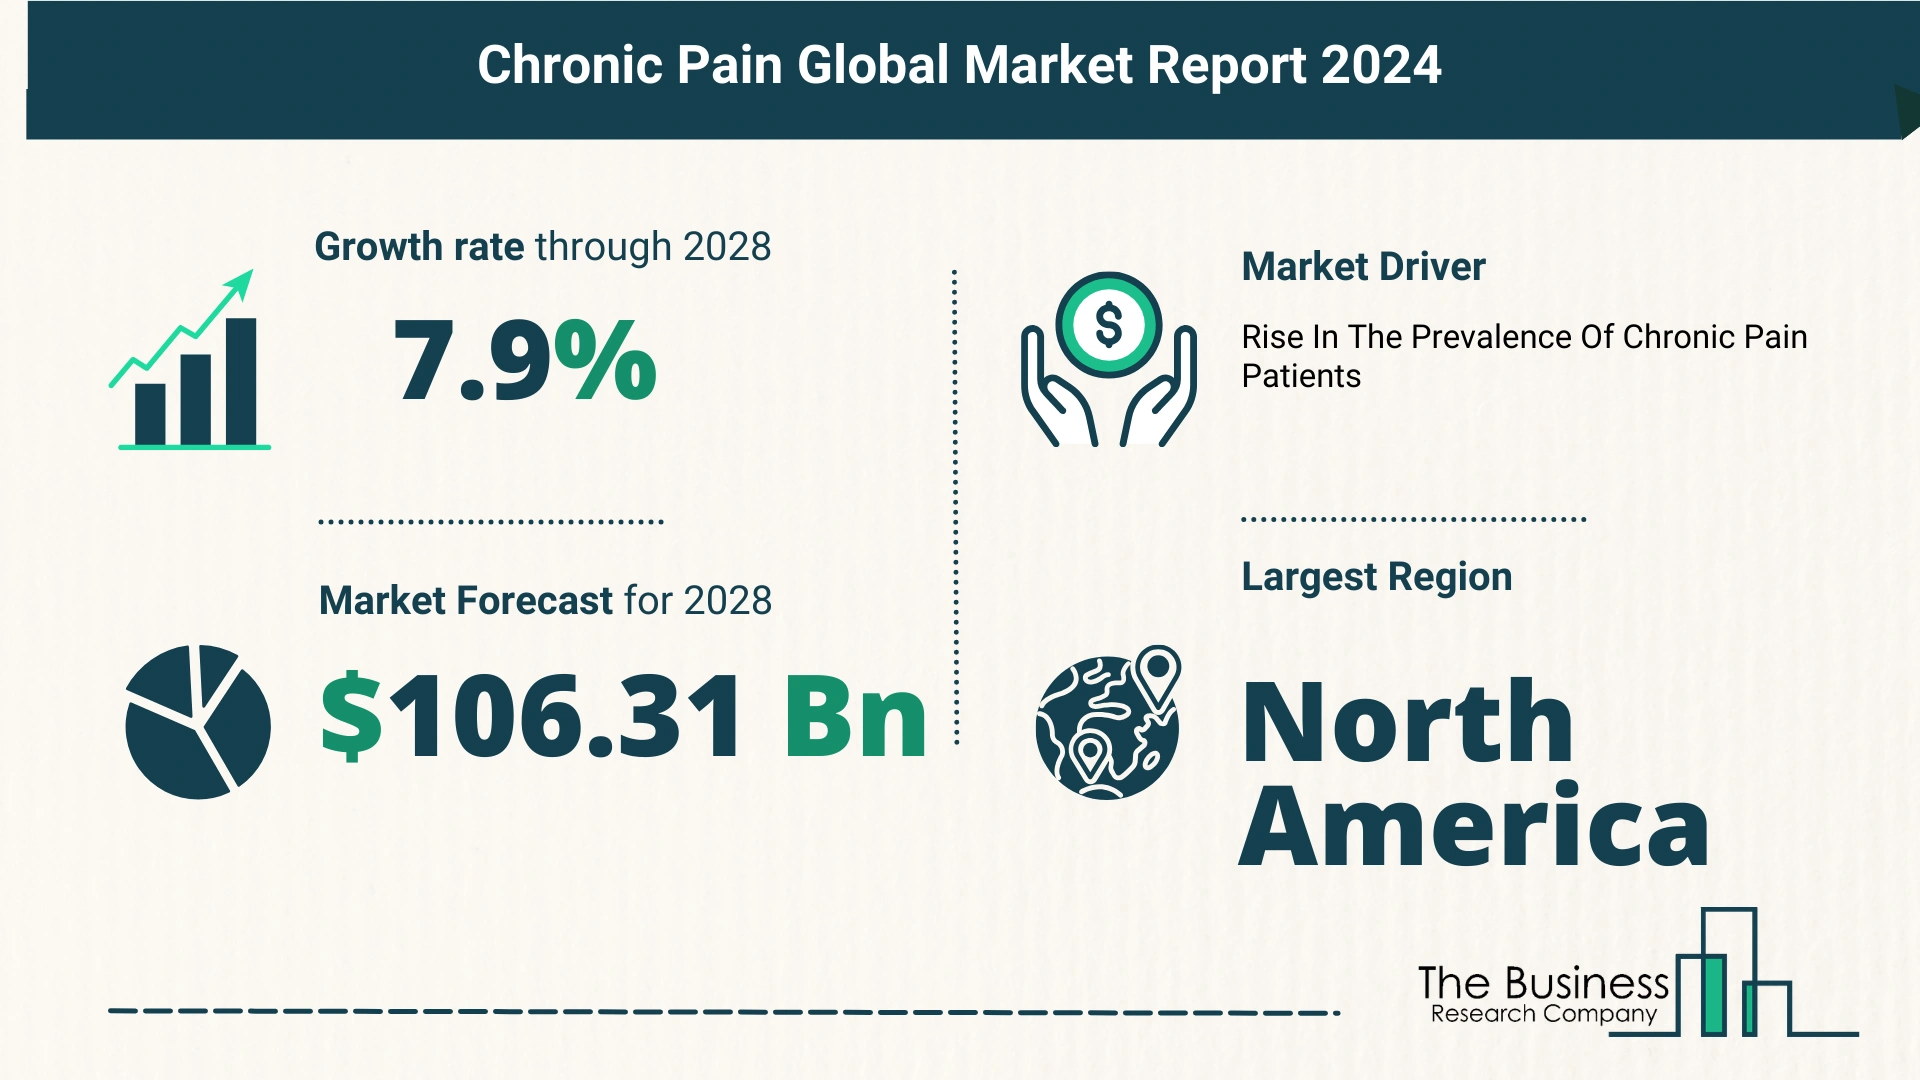 5 Key Insights On The Chronic Pain Market 2024